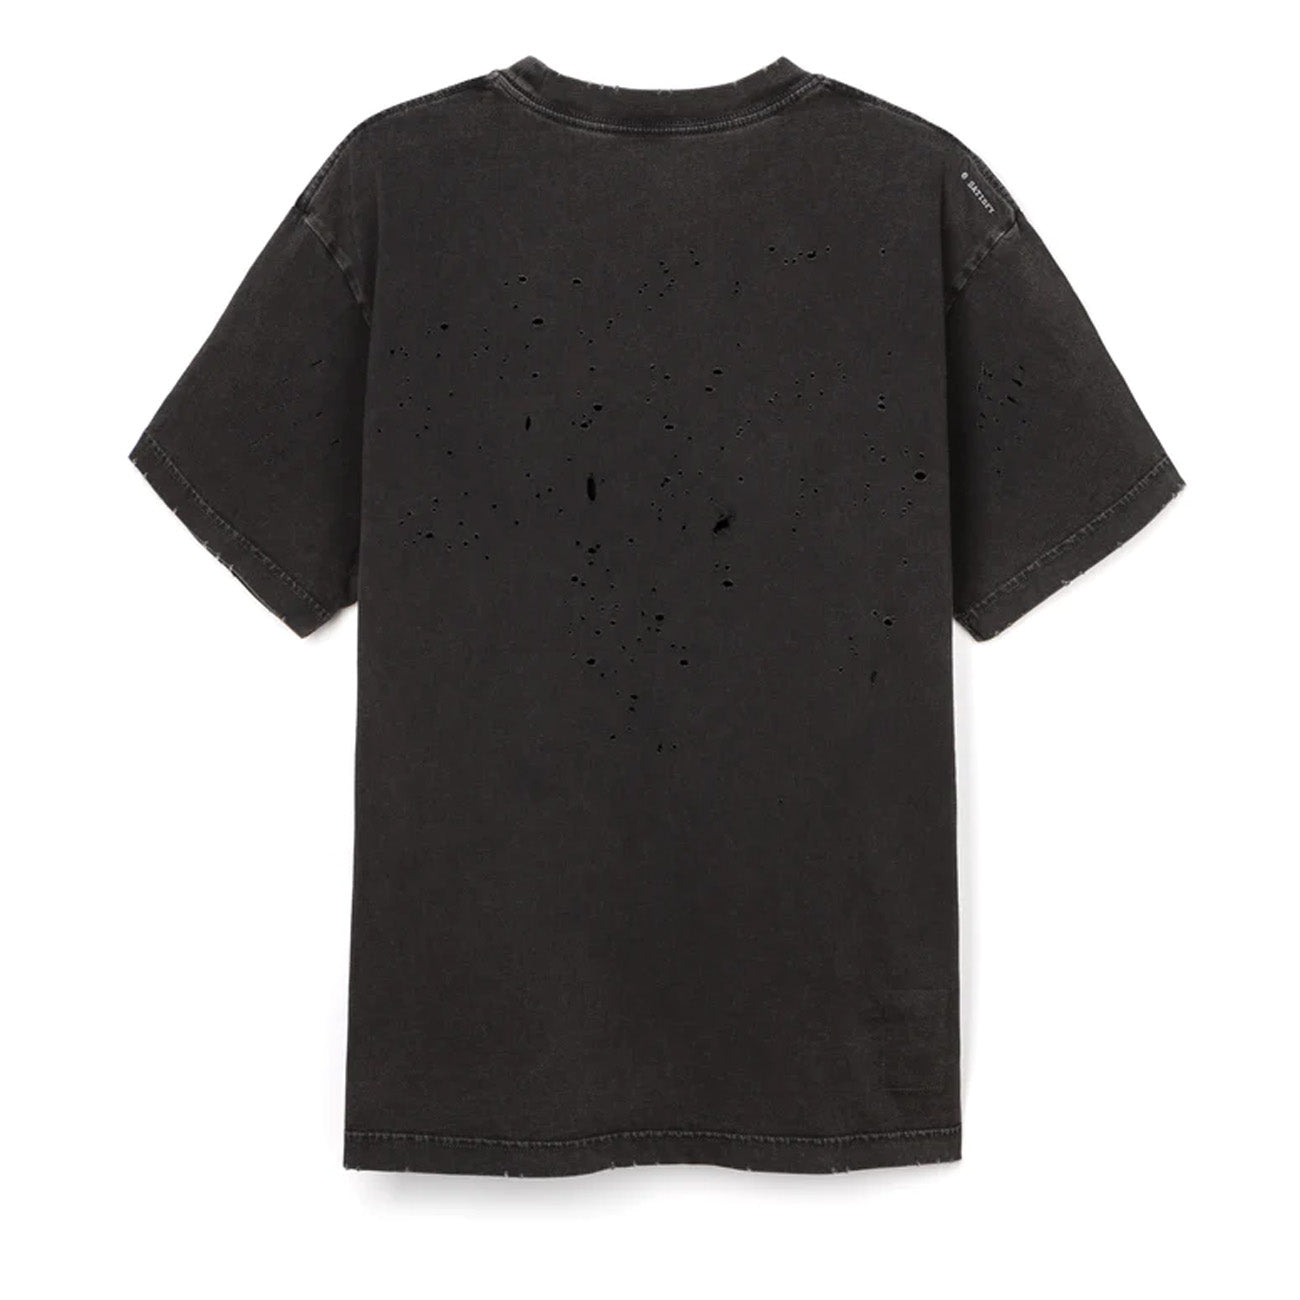 Satisfy Running MothTech T-Shirt Aged Black